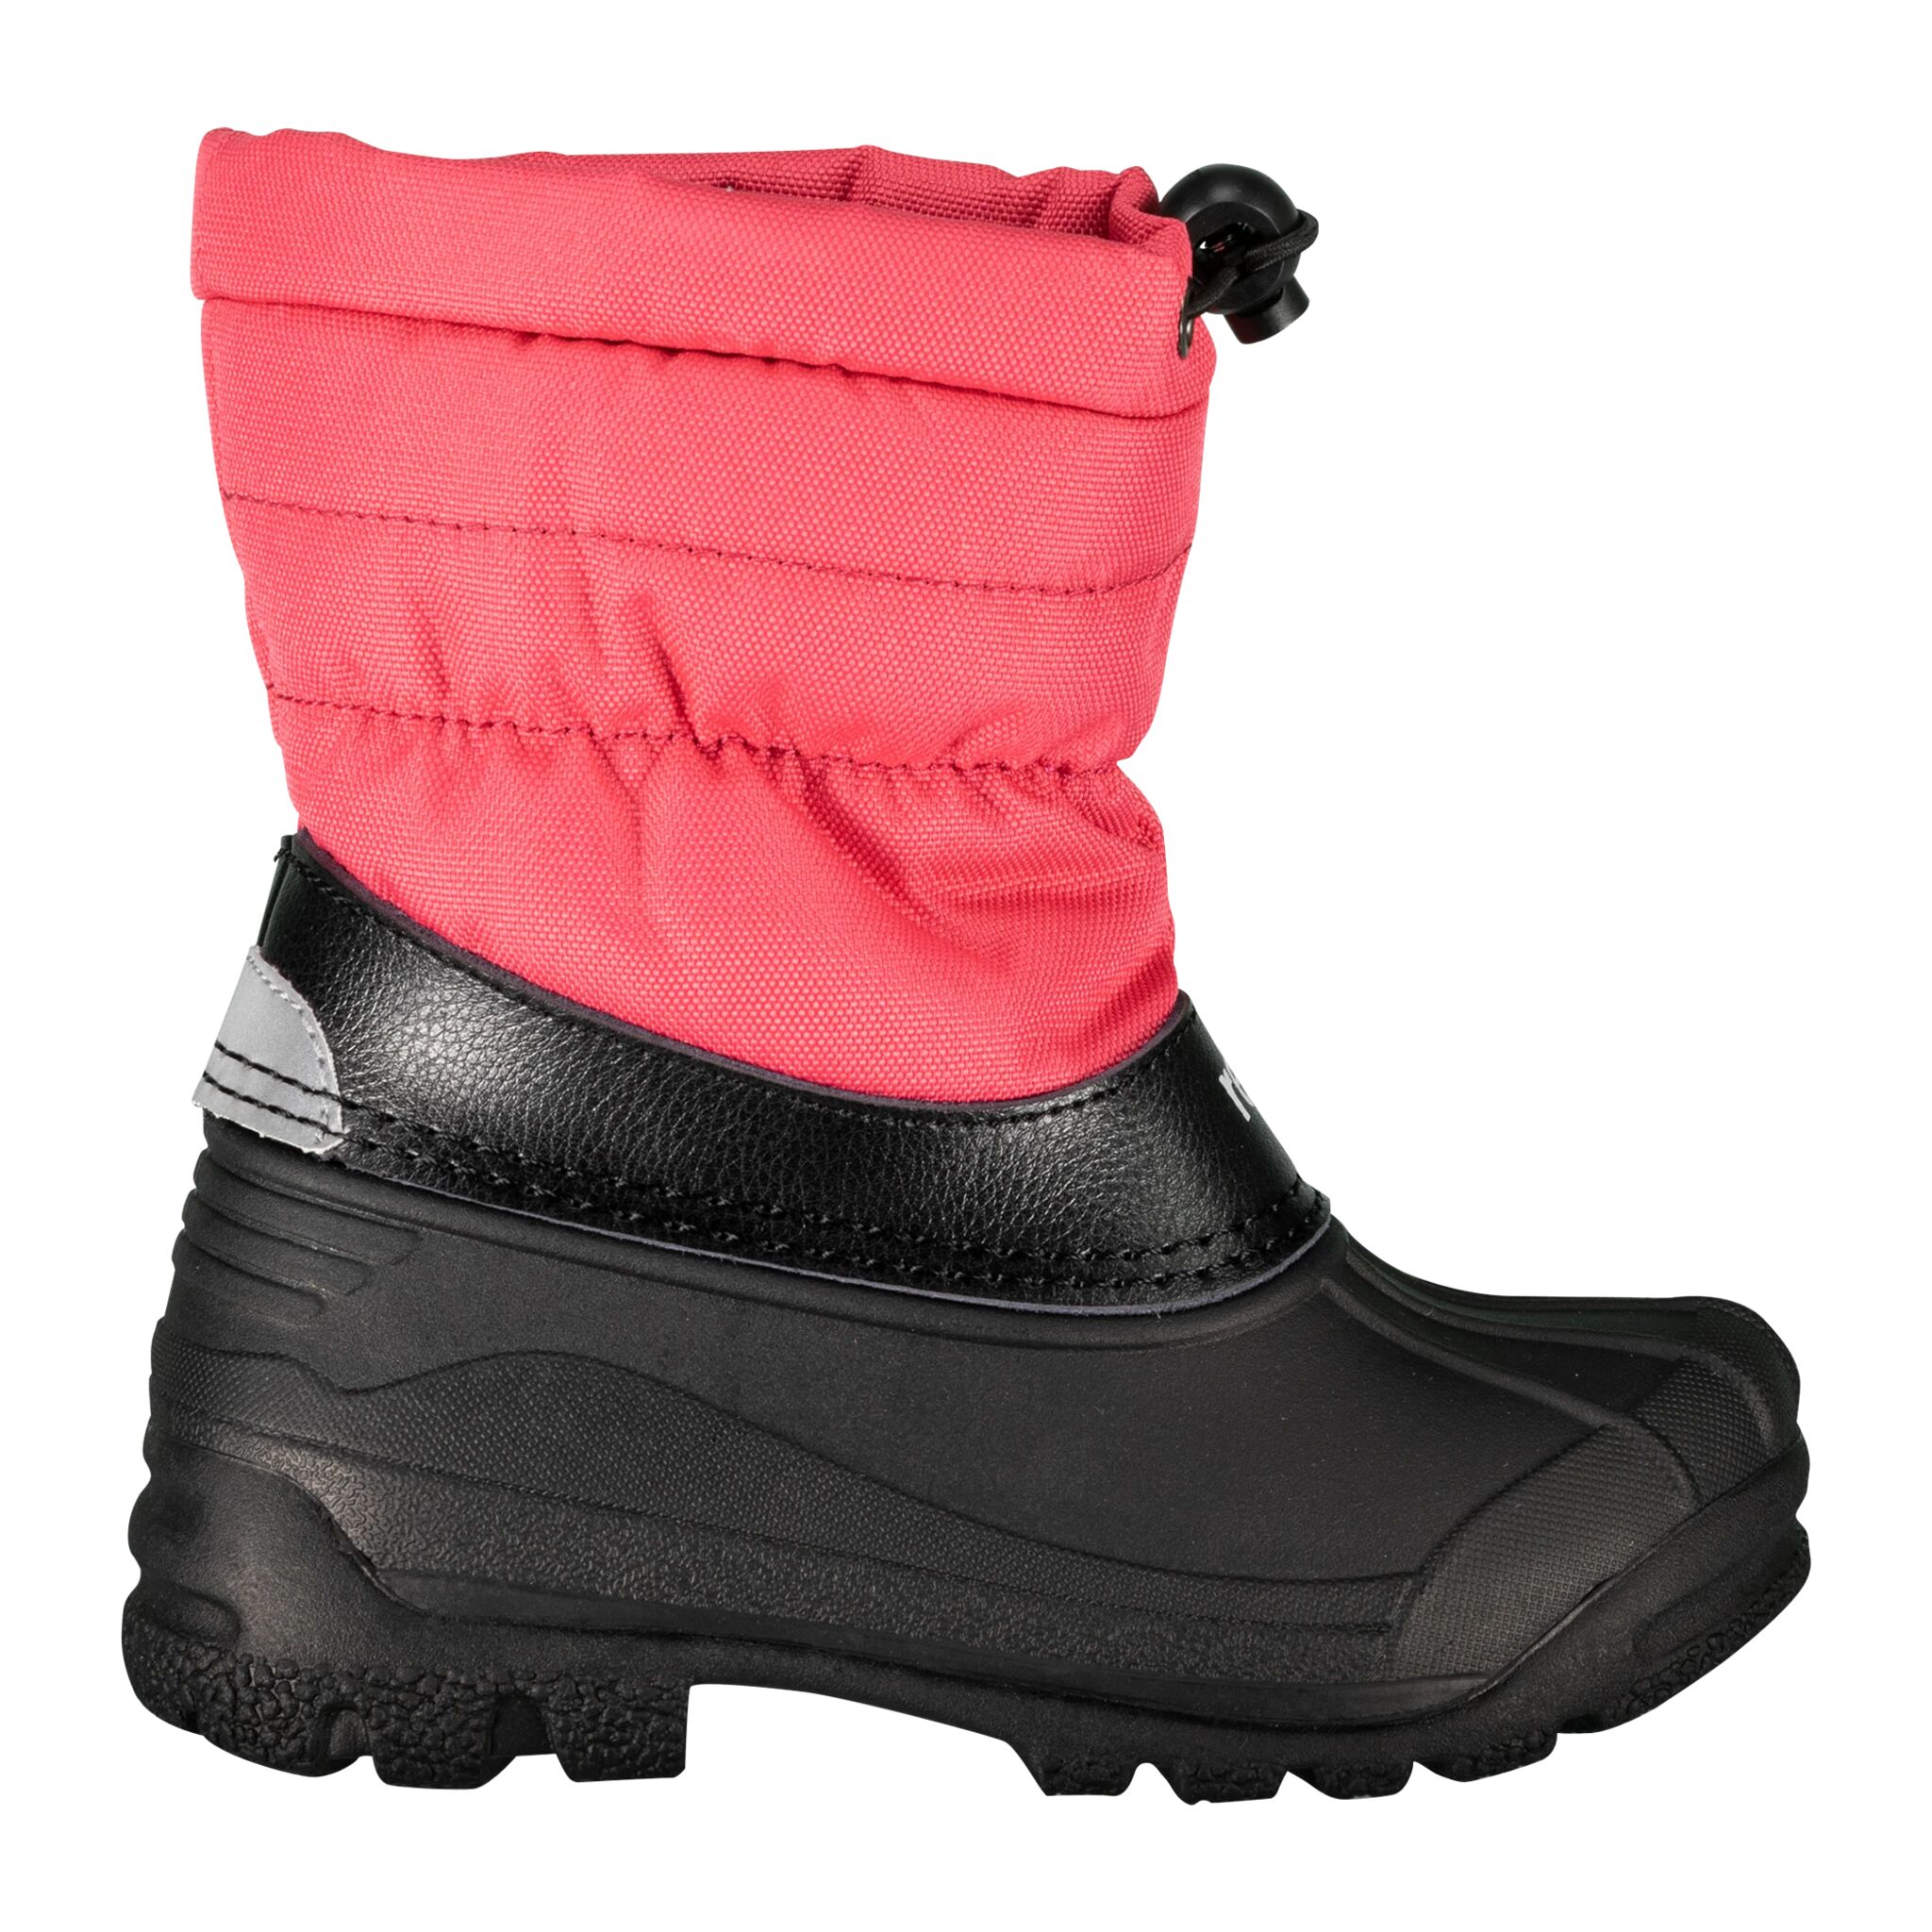 Reima Winter boots Nefar, vintersko barn 35 Azalea Pink